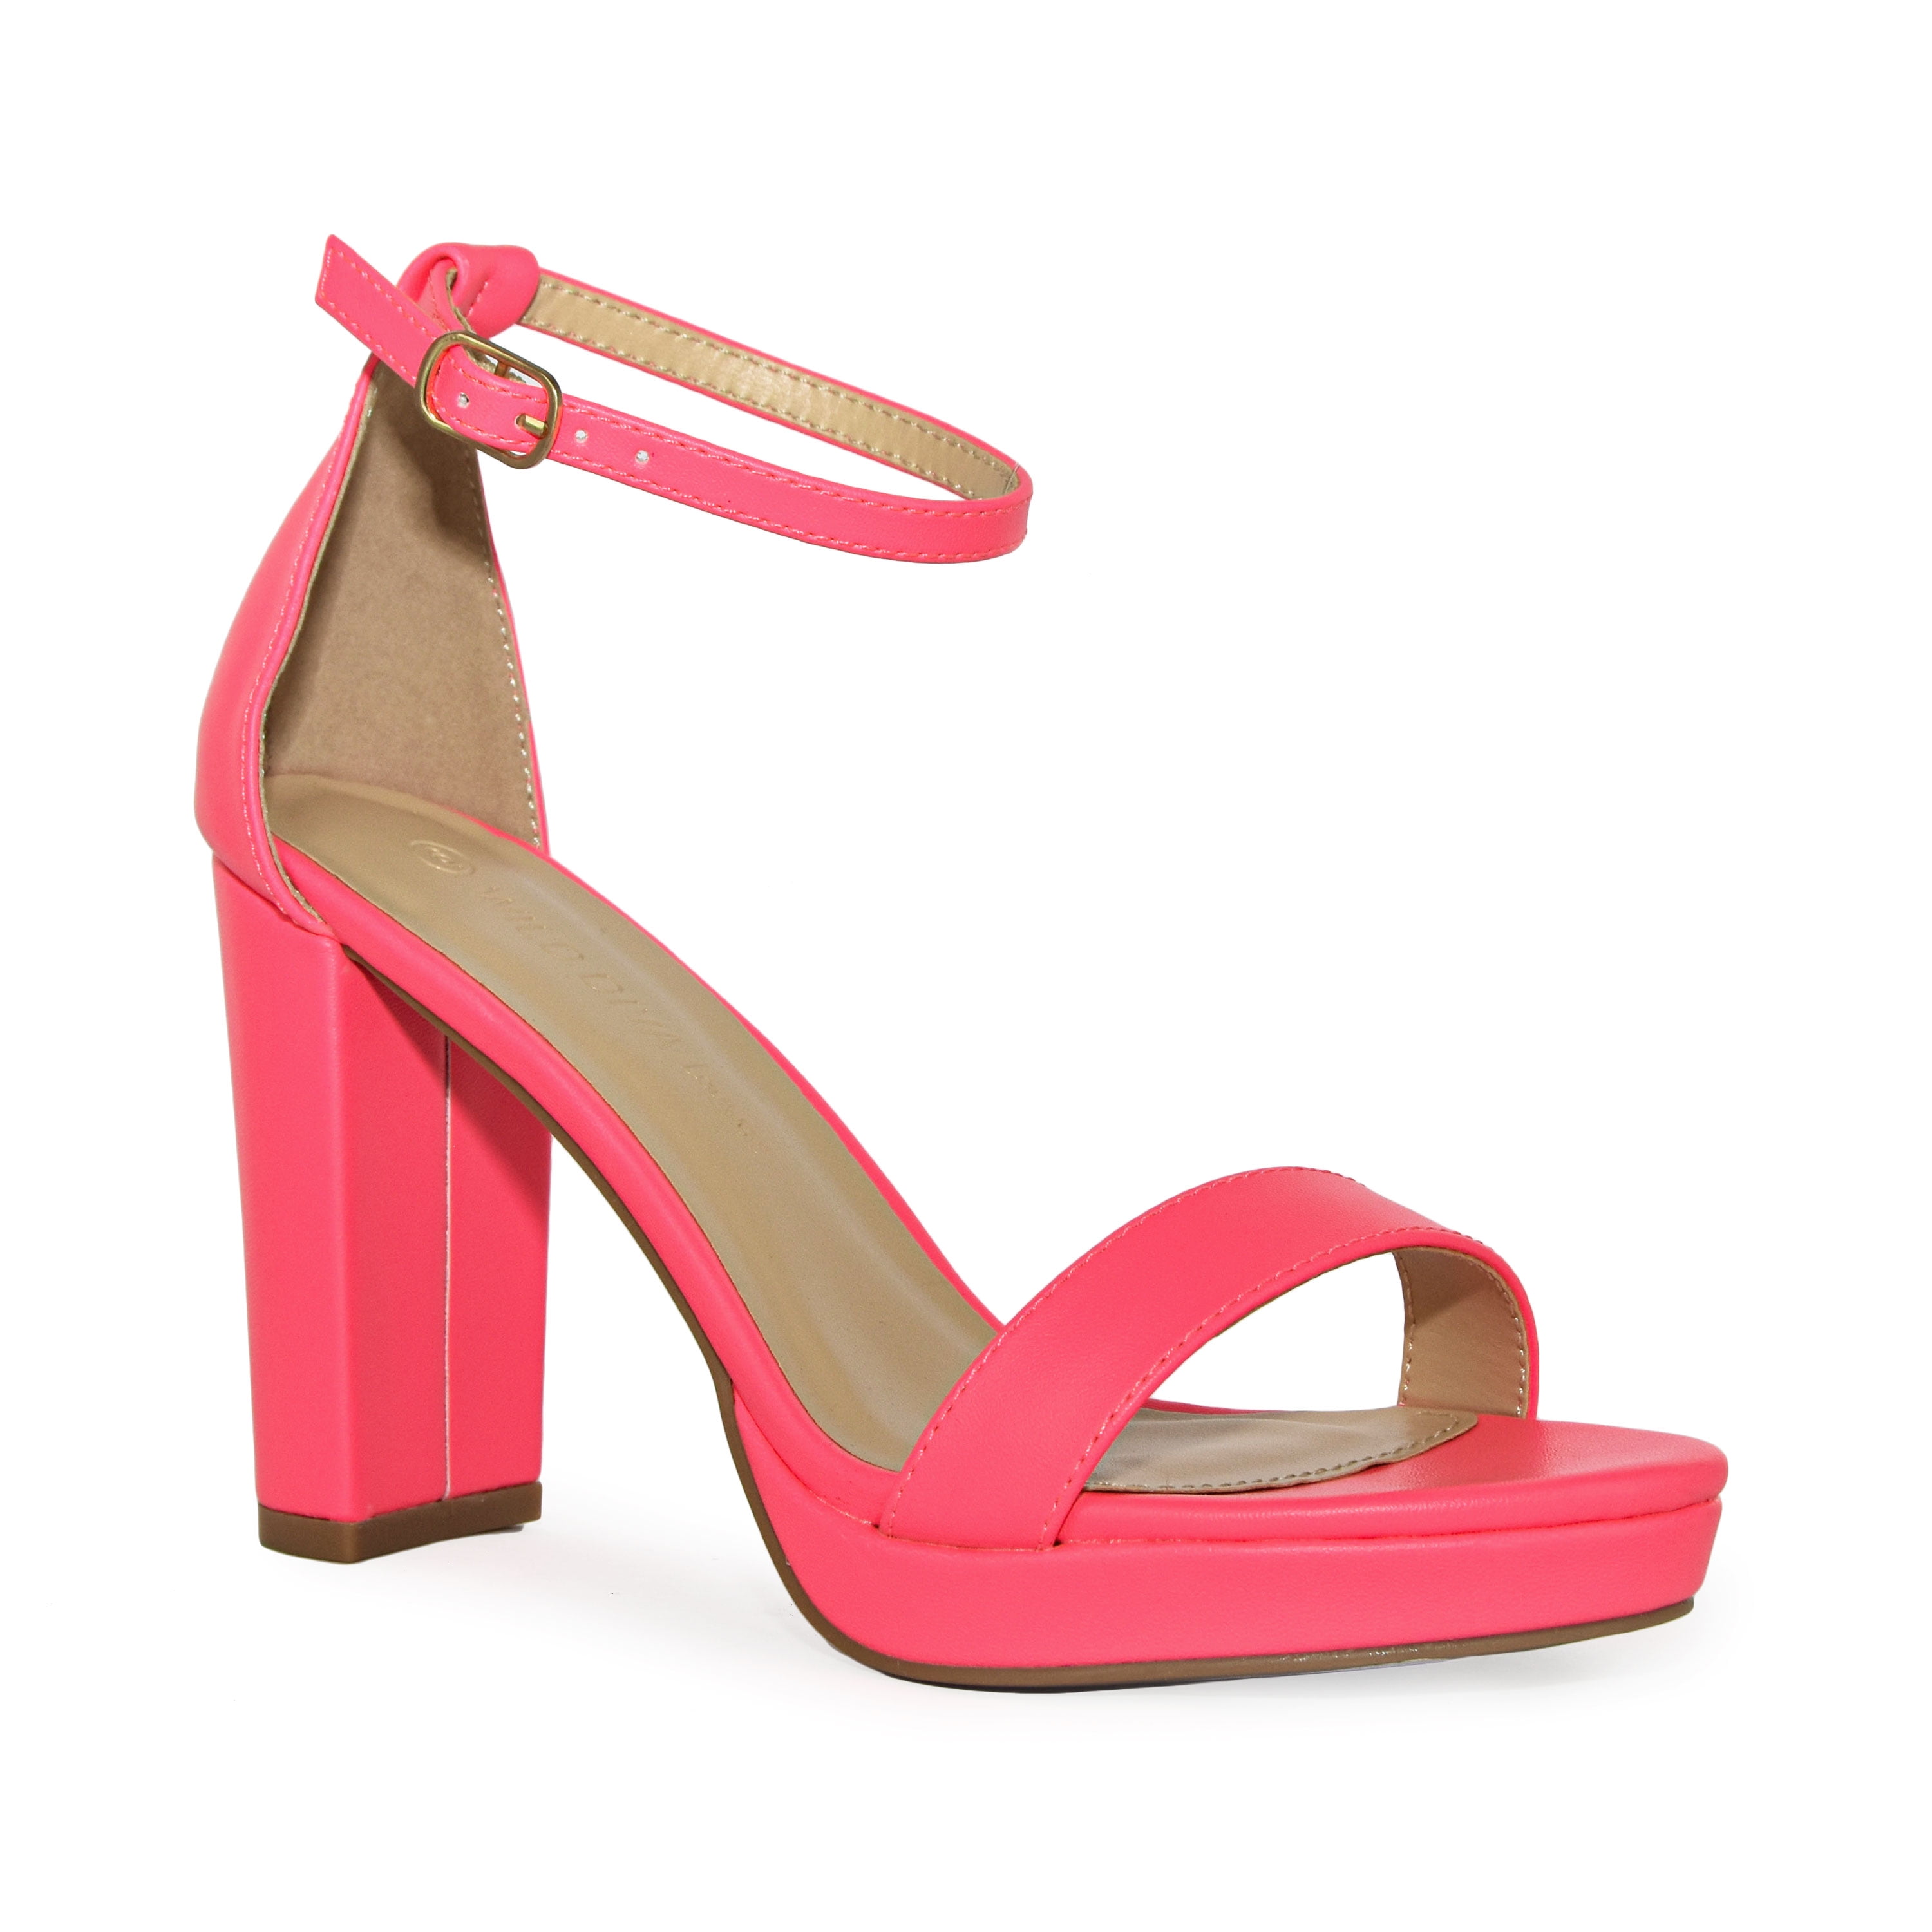 Shop Women's Pink Heels - Steve Madden Australia